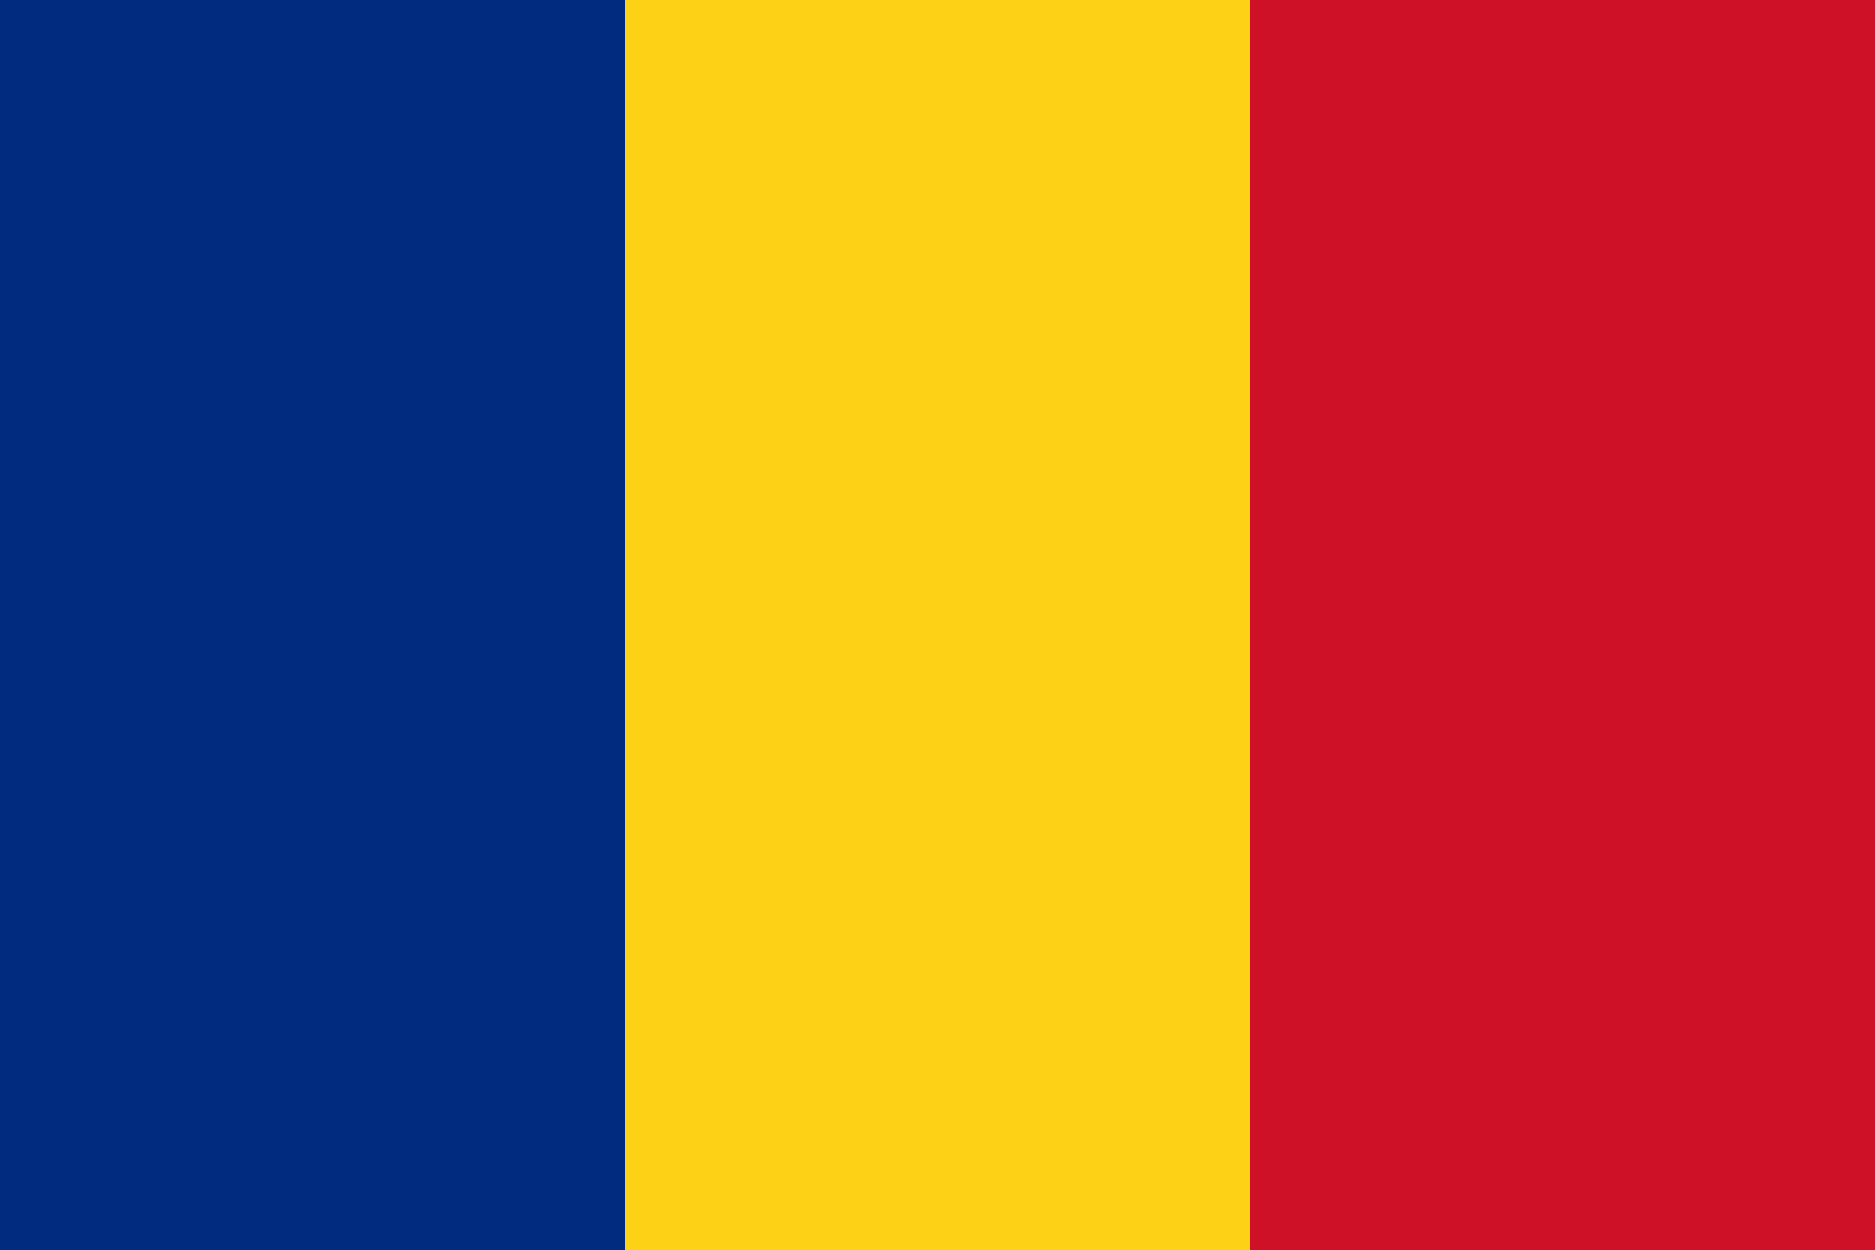 Romania Flag Image - Free Download